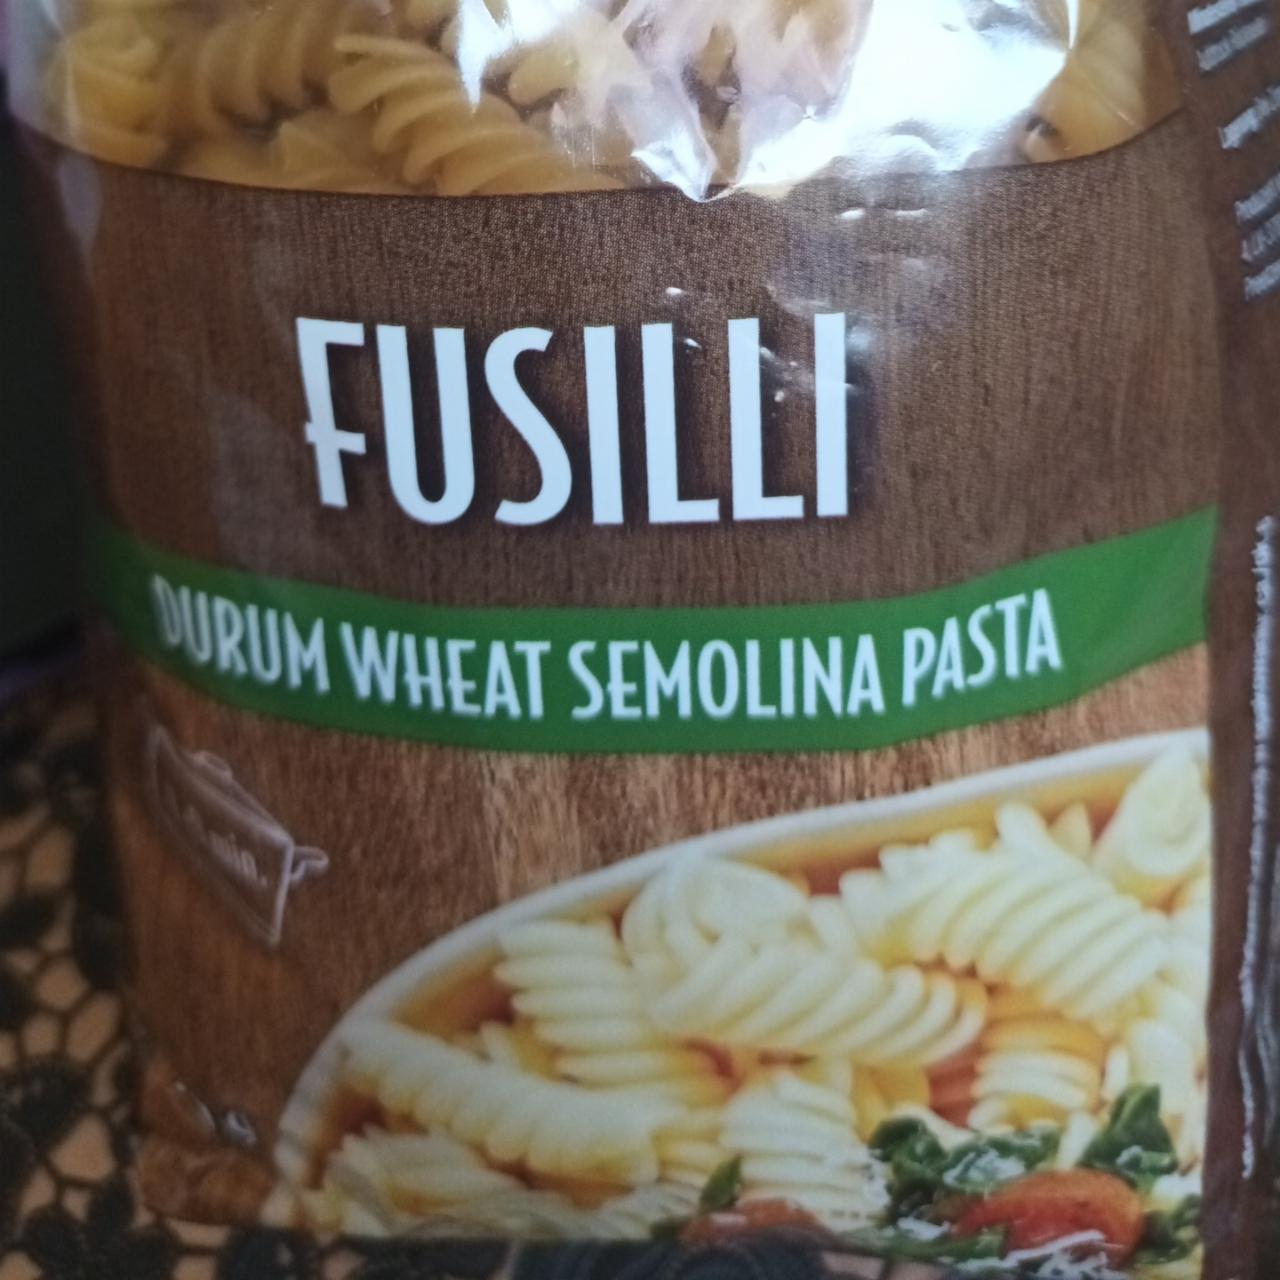 Fotografie - Fusilli durum wheat semolina pasta La Campagna